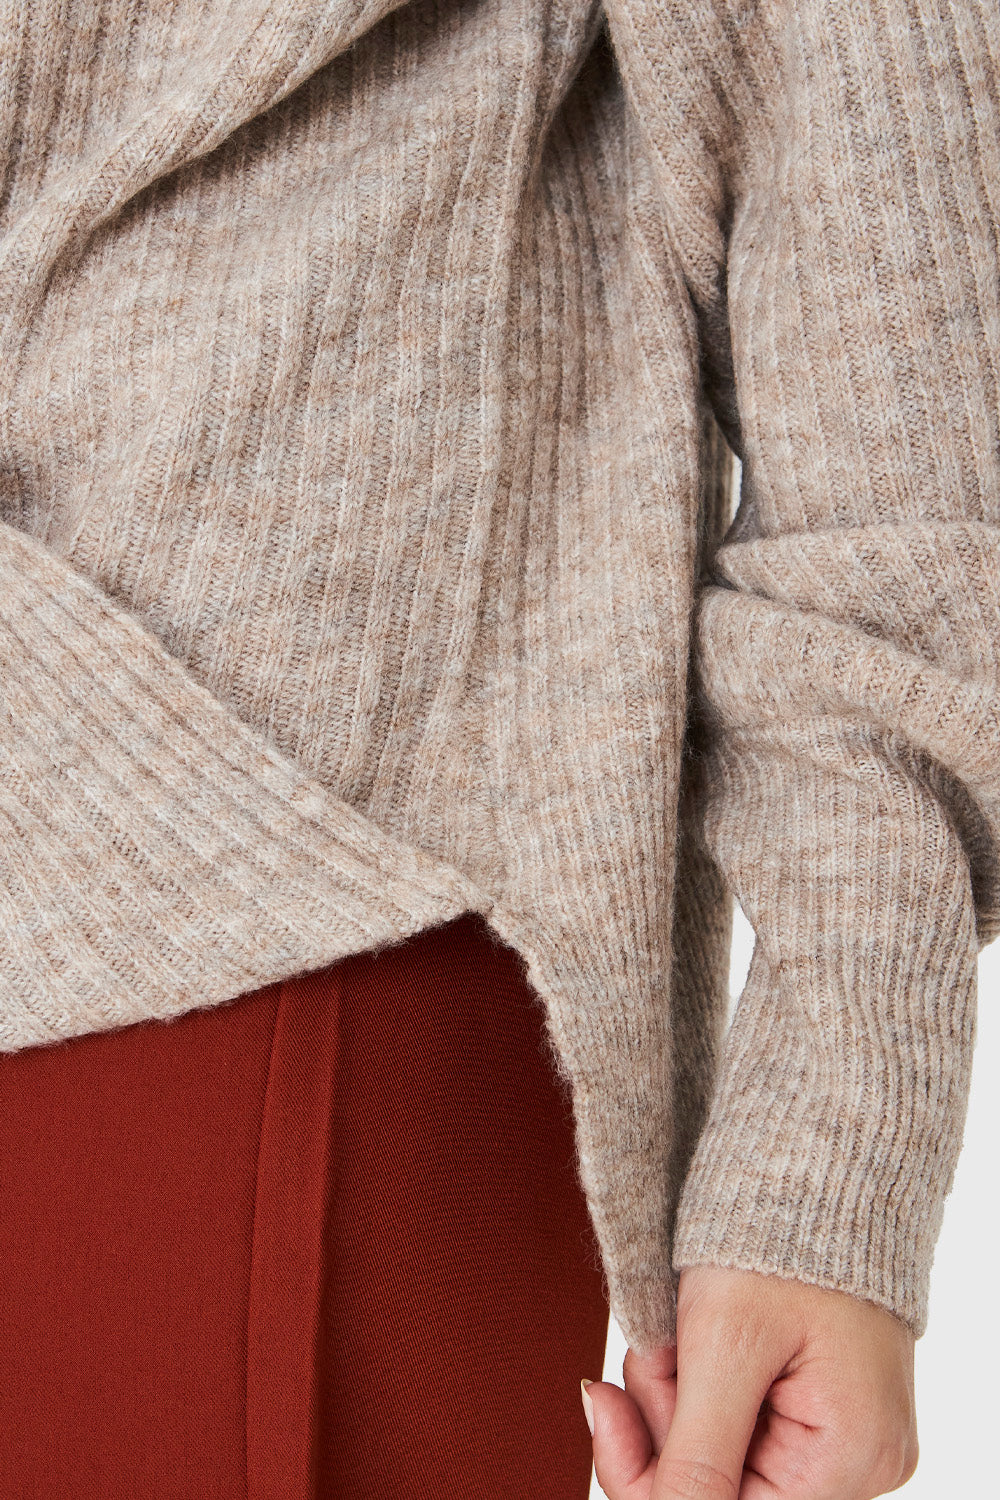 Sweater Escote Cruzado Khaki